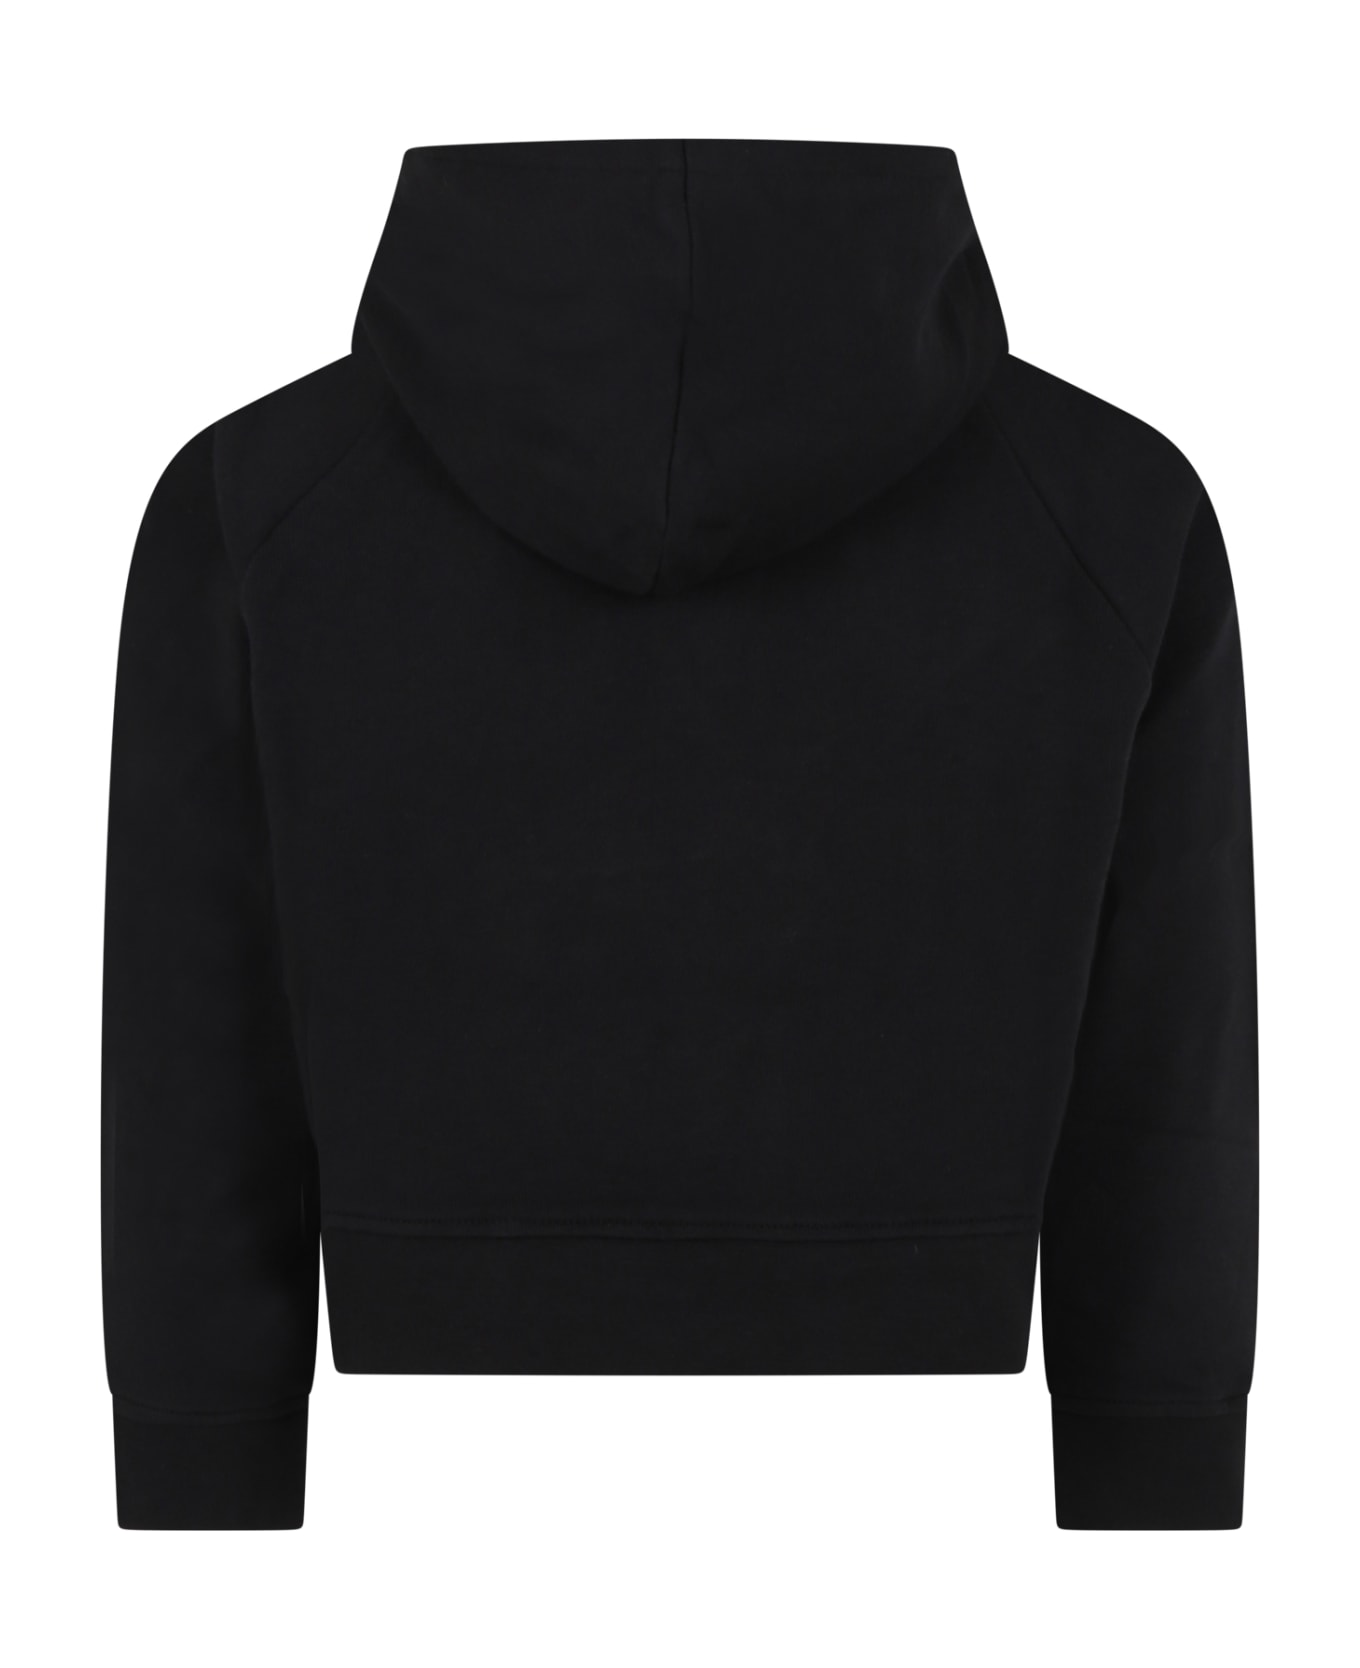 Stella McCartney Kids Black Sweatshirt For Girl With Logo - Black